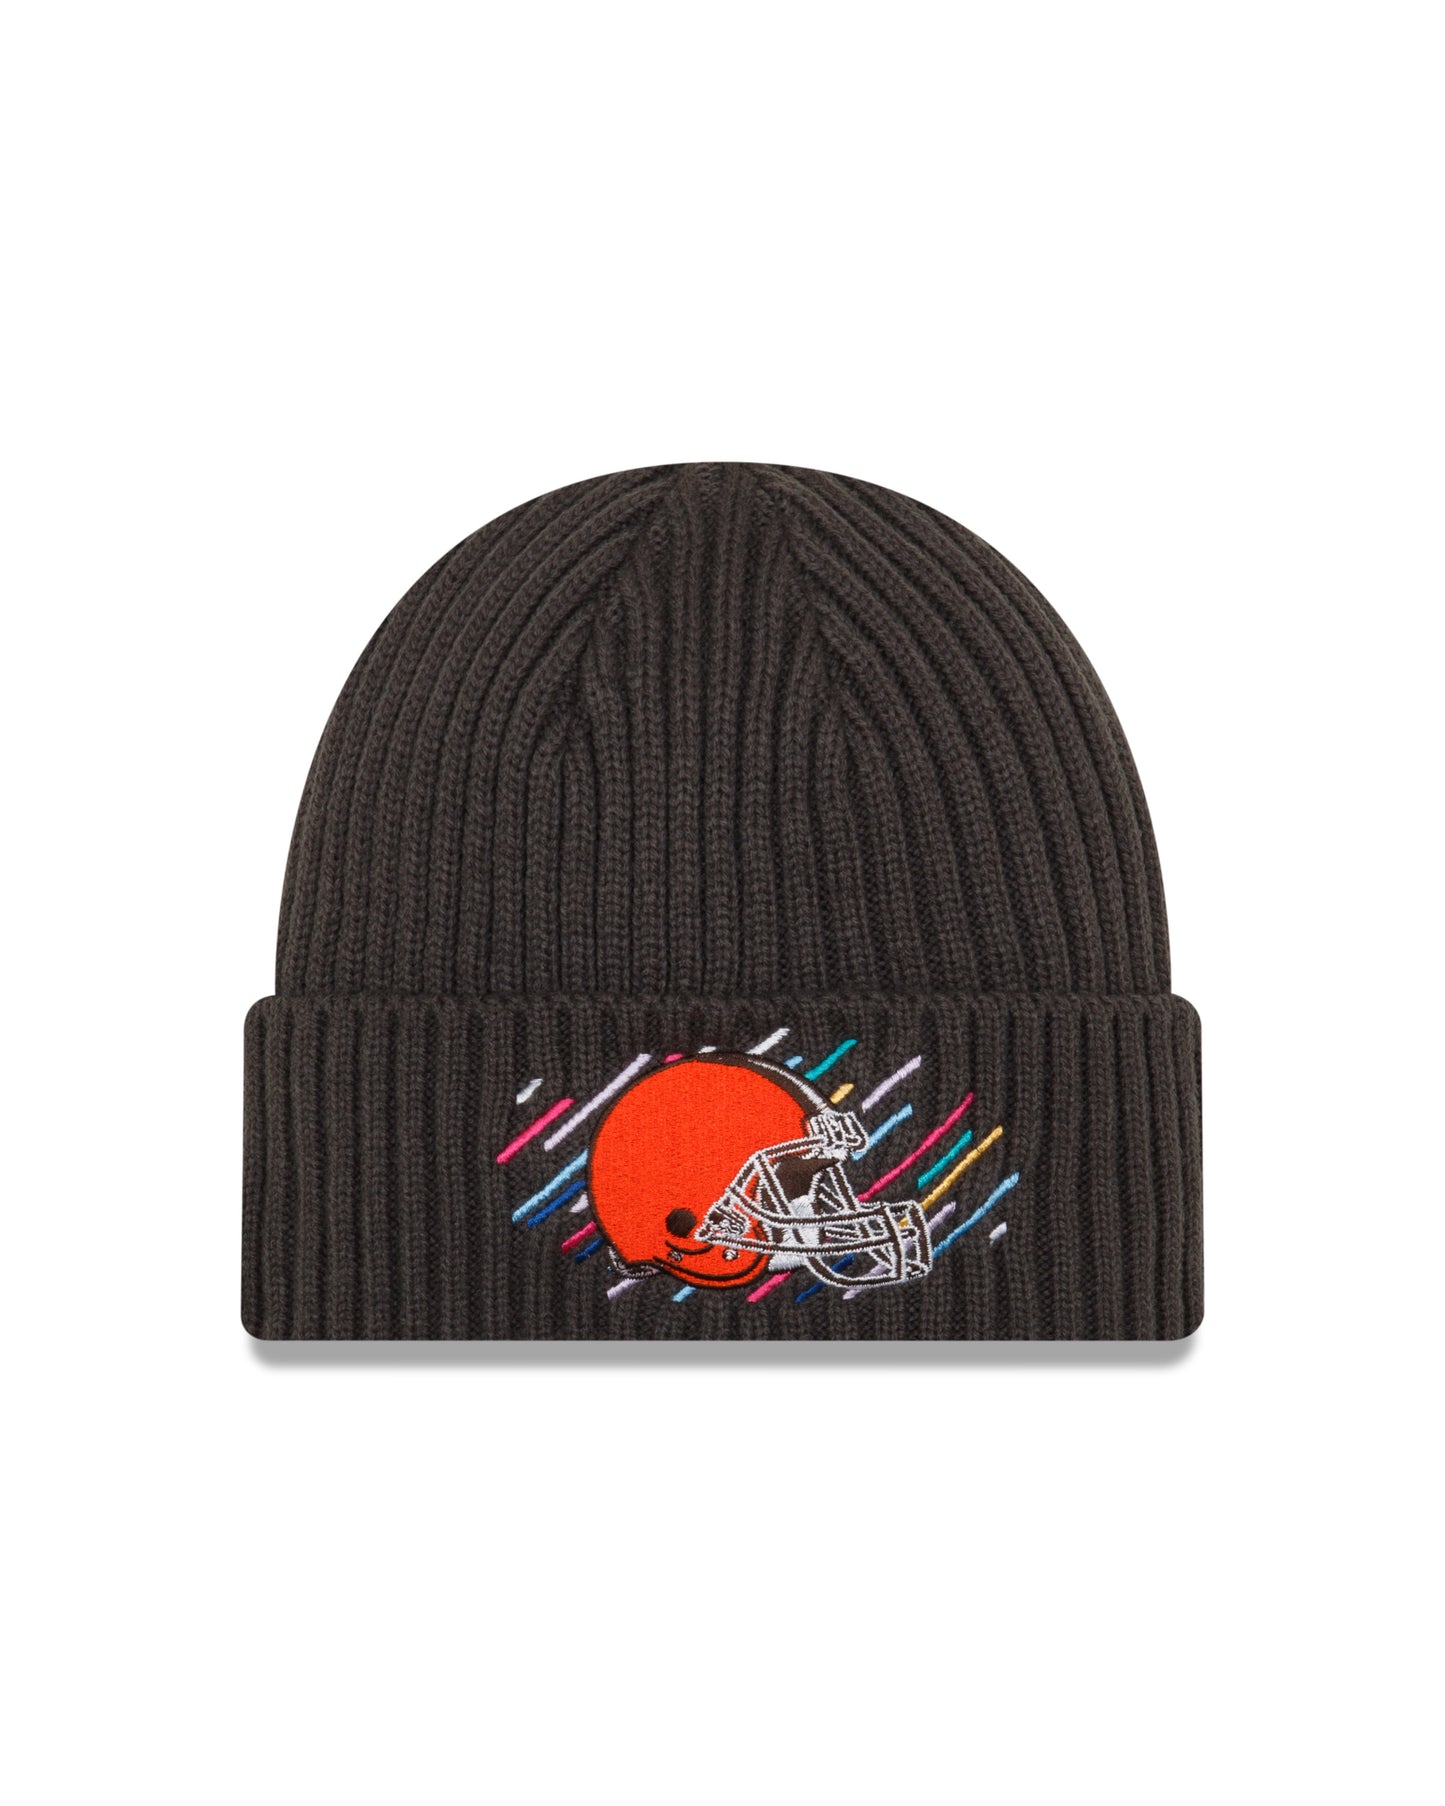 Cleveland Browns New Era Crucial Catch Cuffed Knit Hat - Gray